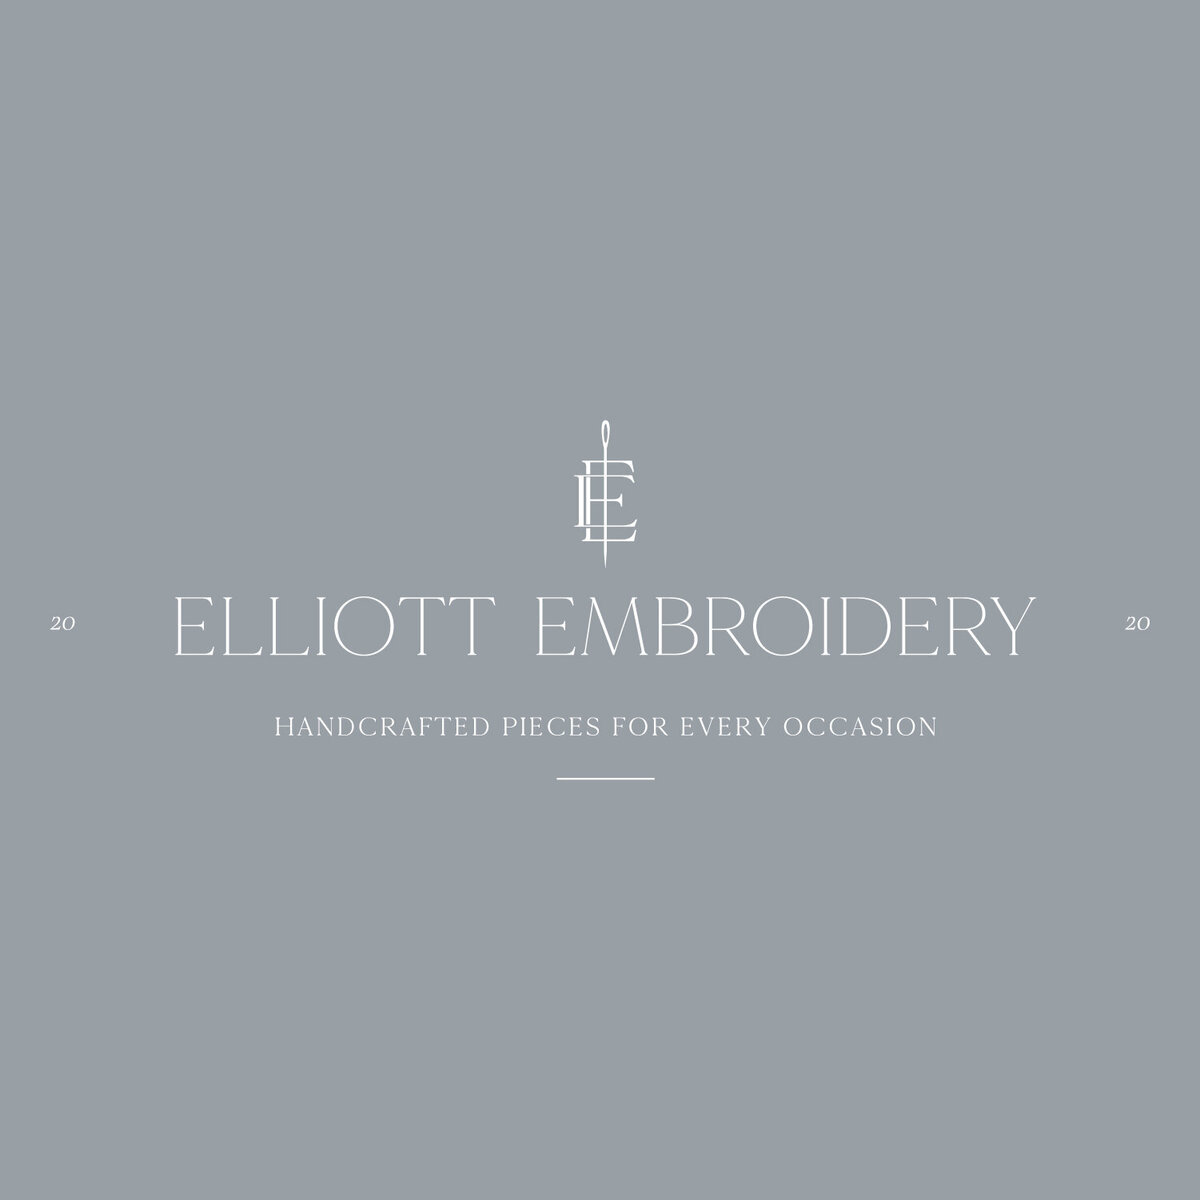 Elliott & Co and Elliott Embroidery Brand Launch-30